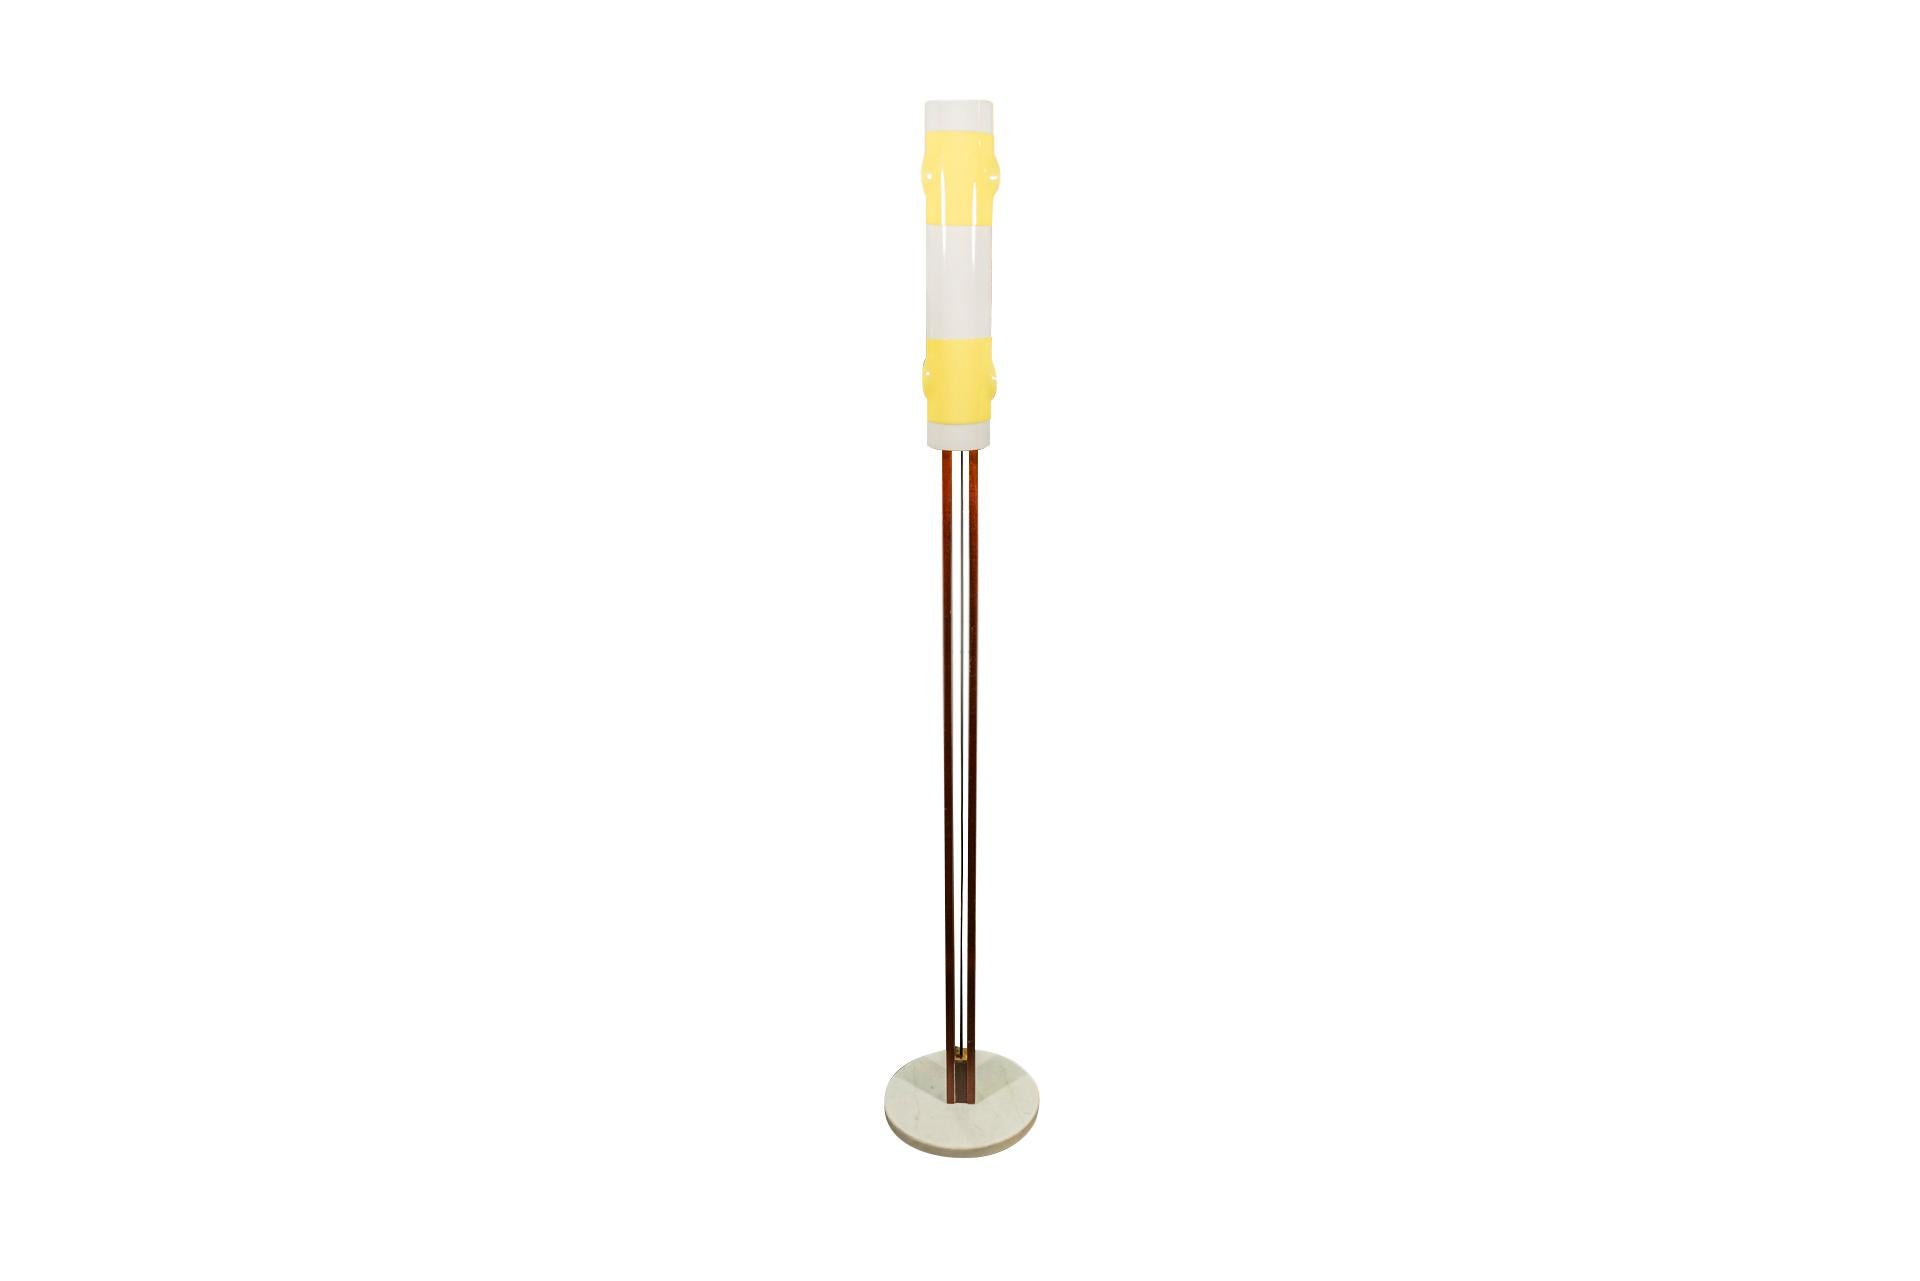 Stilnovo, Pair of floor lamps,
Circular marble base, wood,
Circular adjustable lamp shades in white and yellow perspex,
Italy, circa 1960.

Measures: Height 180 cm, diameter 32 cm.